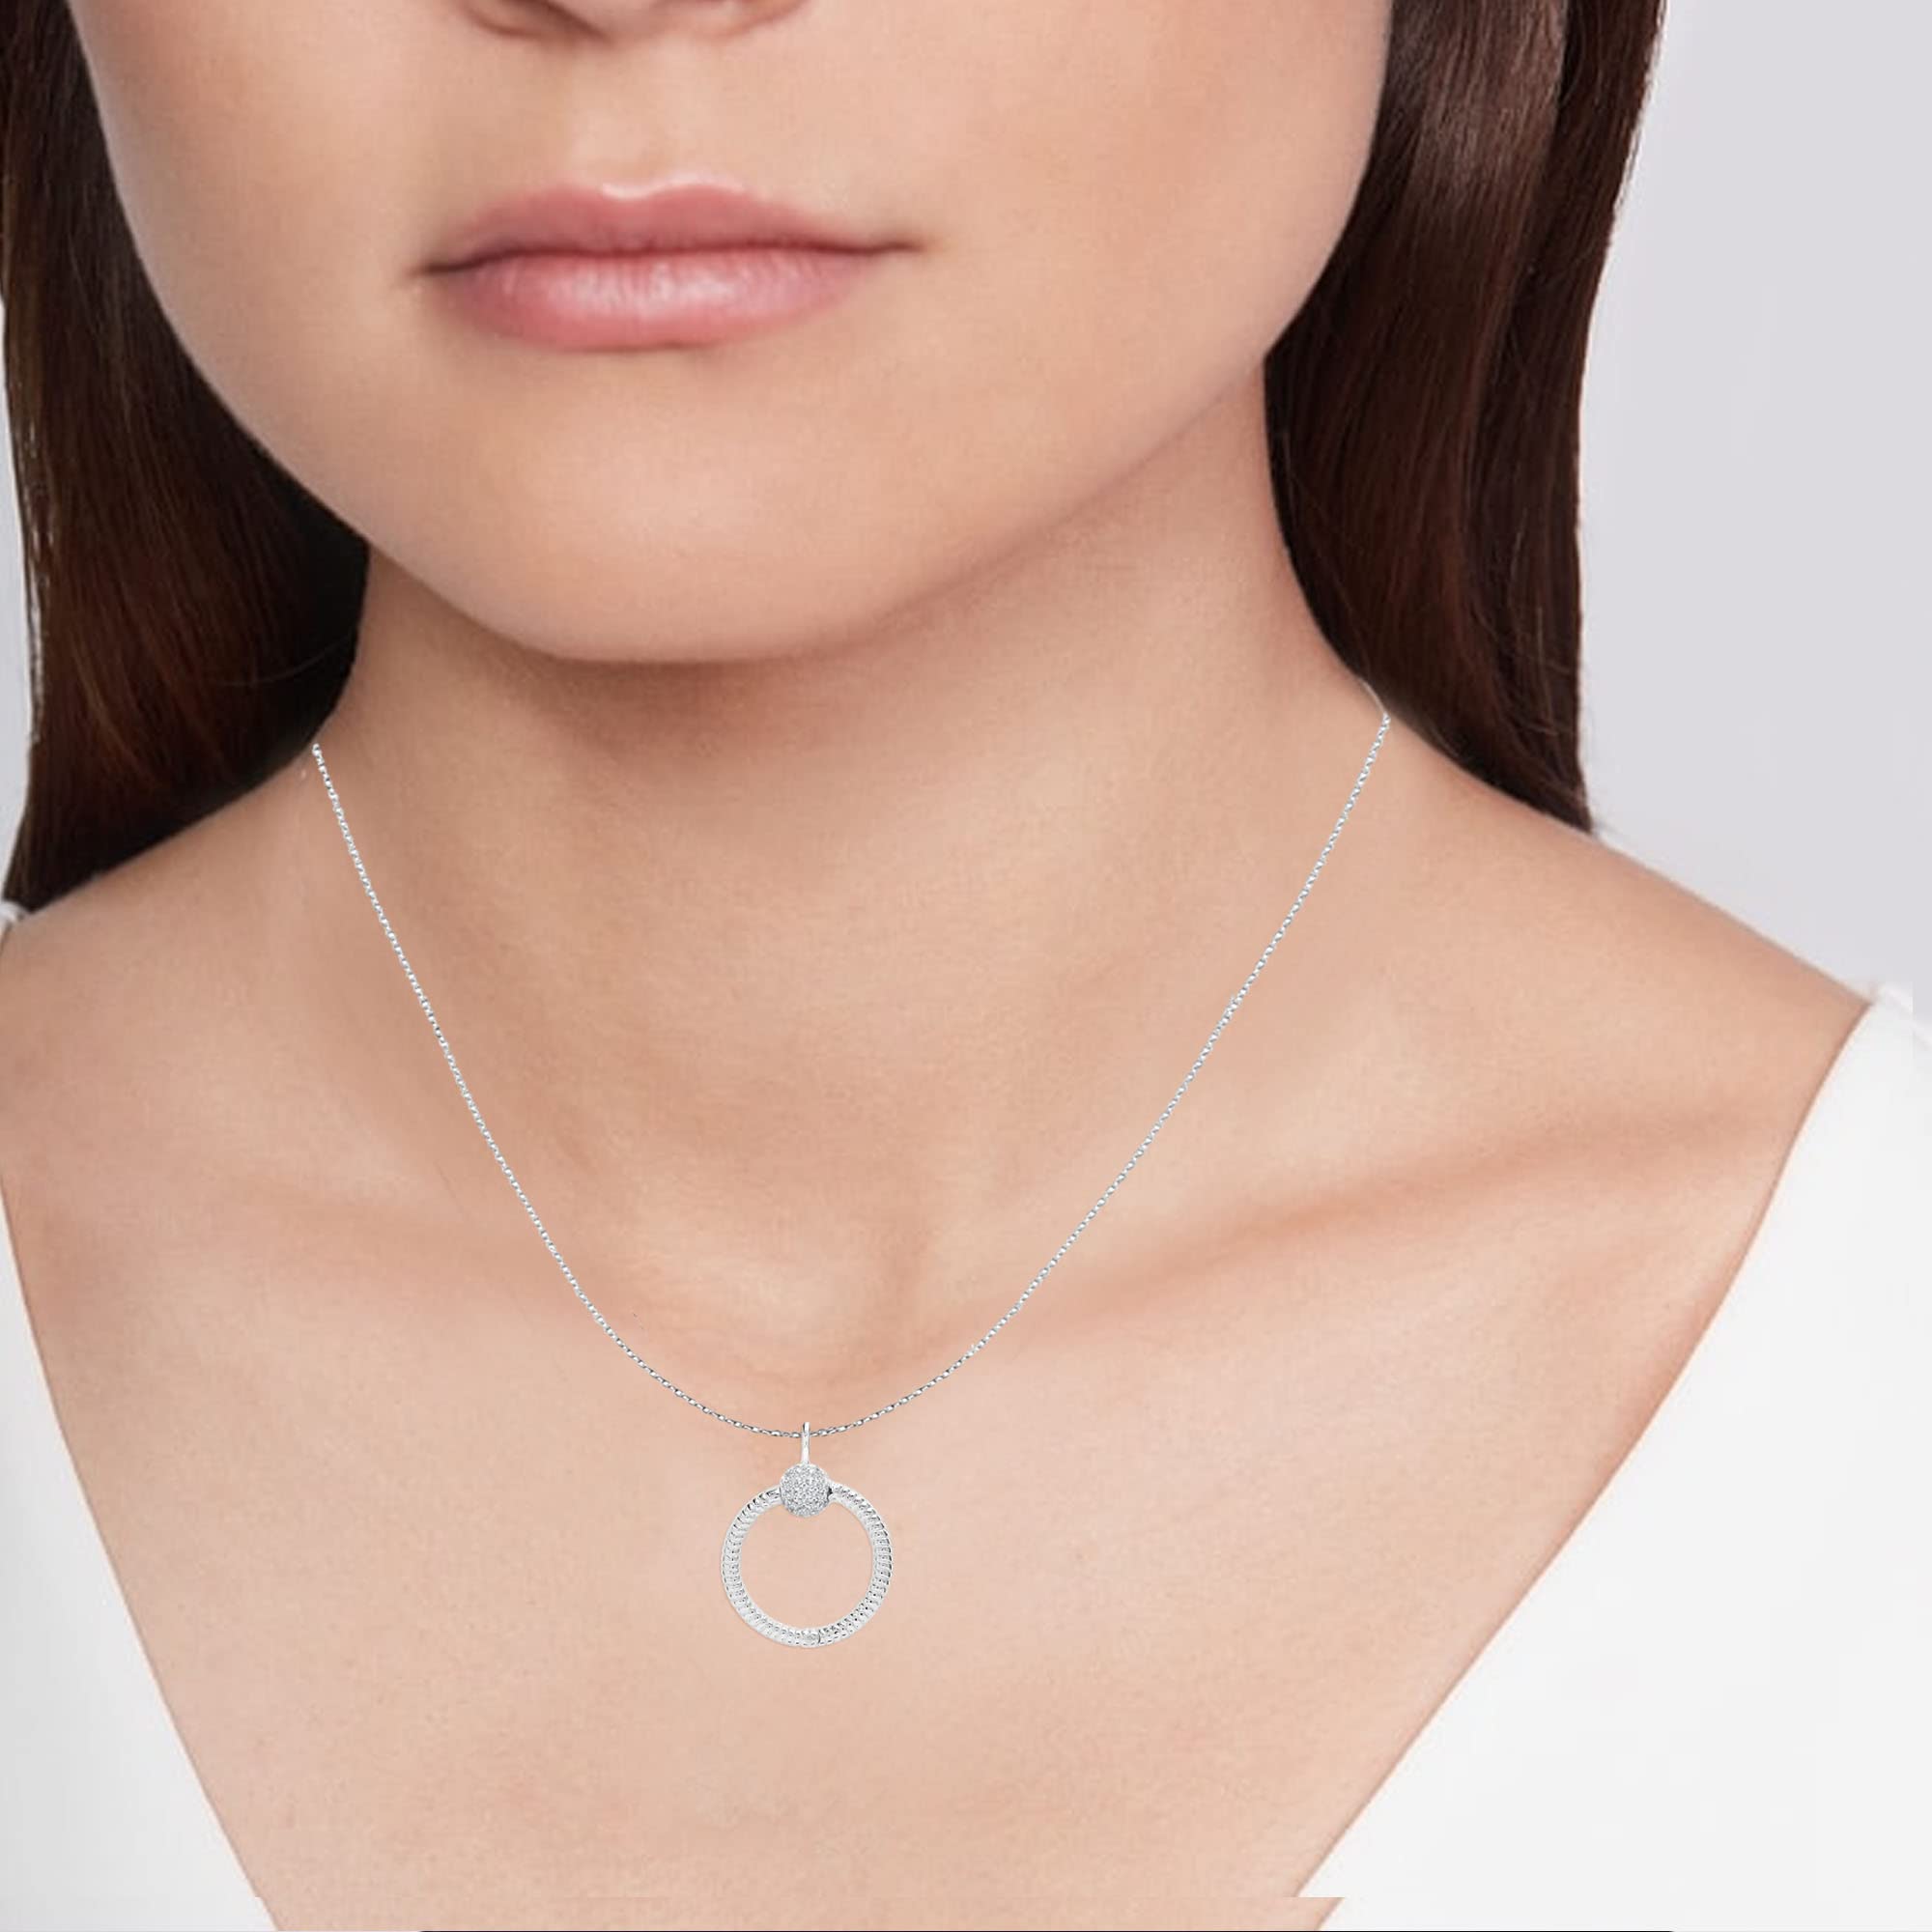 BRAND NEW* Pandora Sparkling All-seeing Eye Charm Necklace Set NAMPS0204 |  eBay